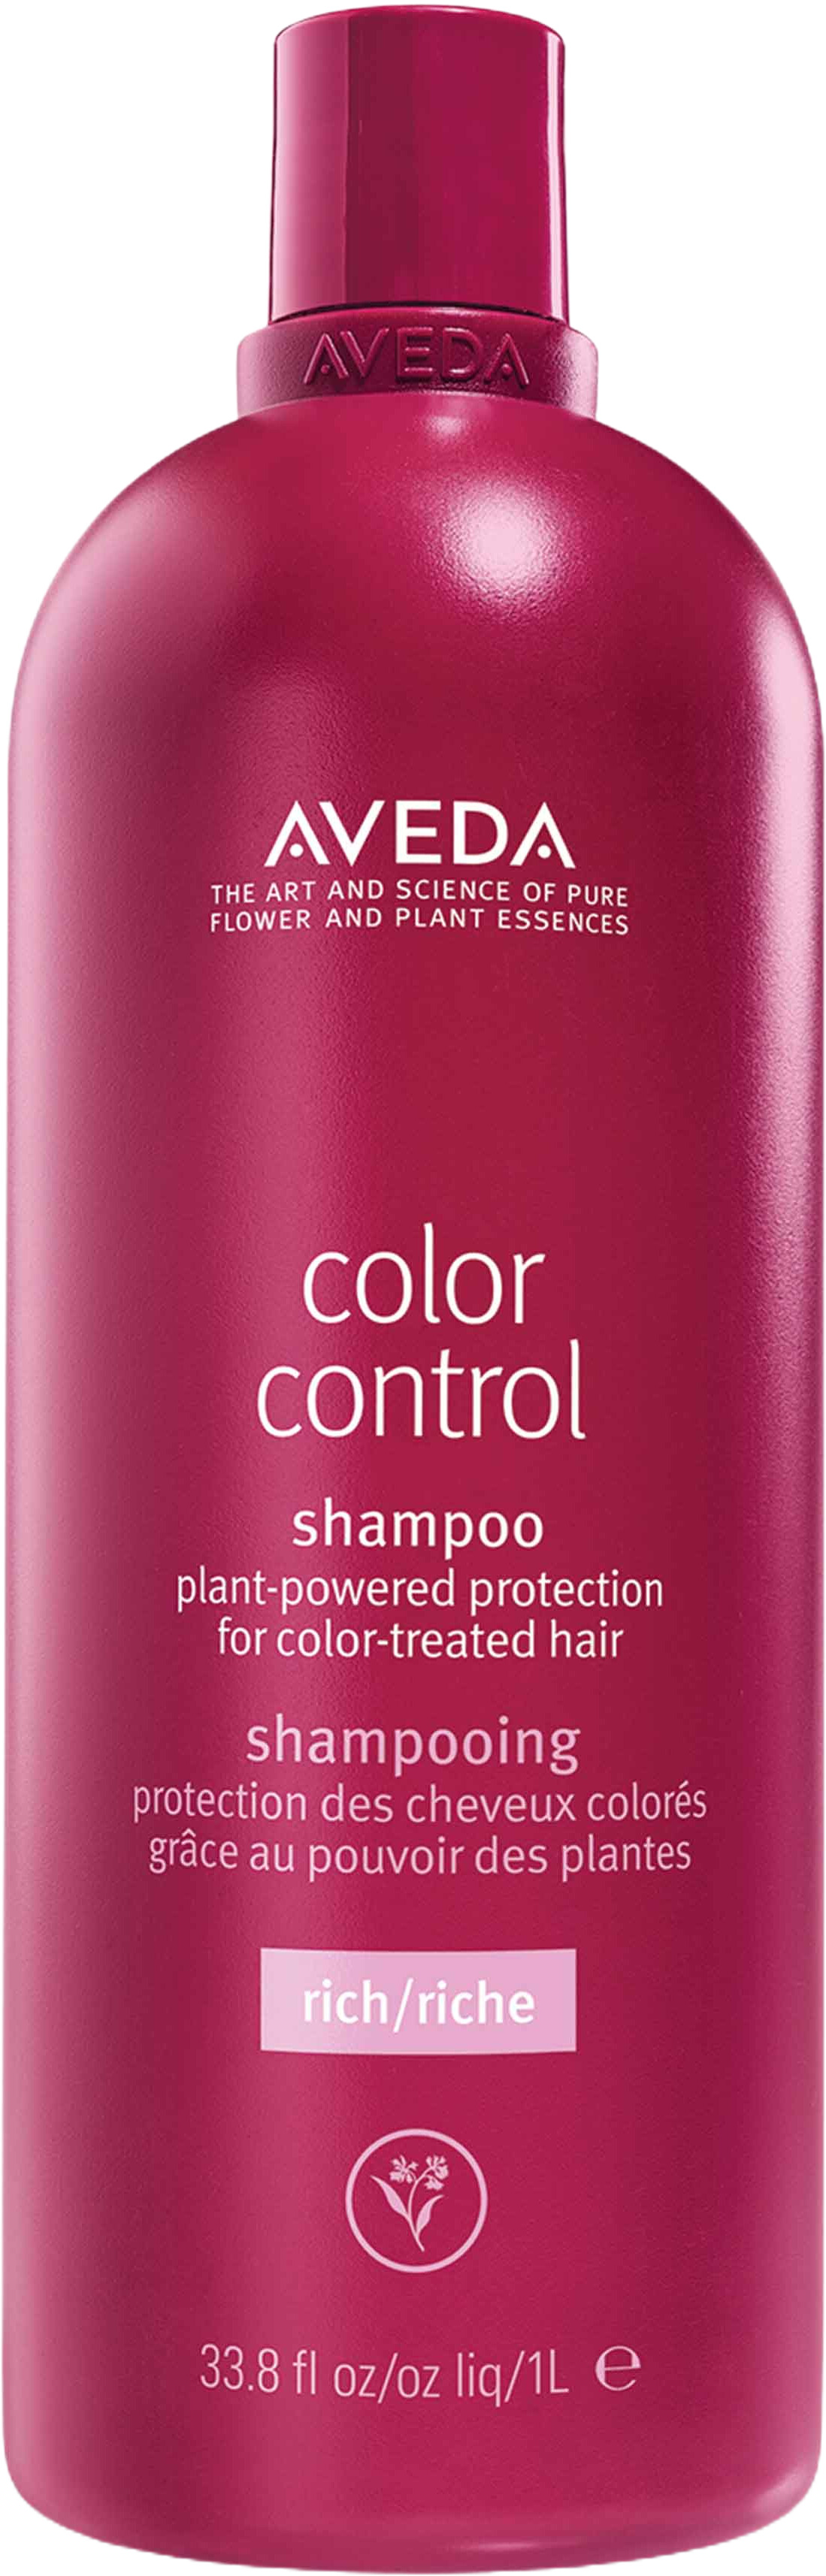 Aveda Color Control Rich Shampoo 1 litre